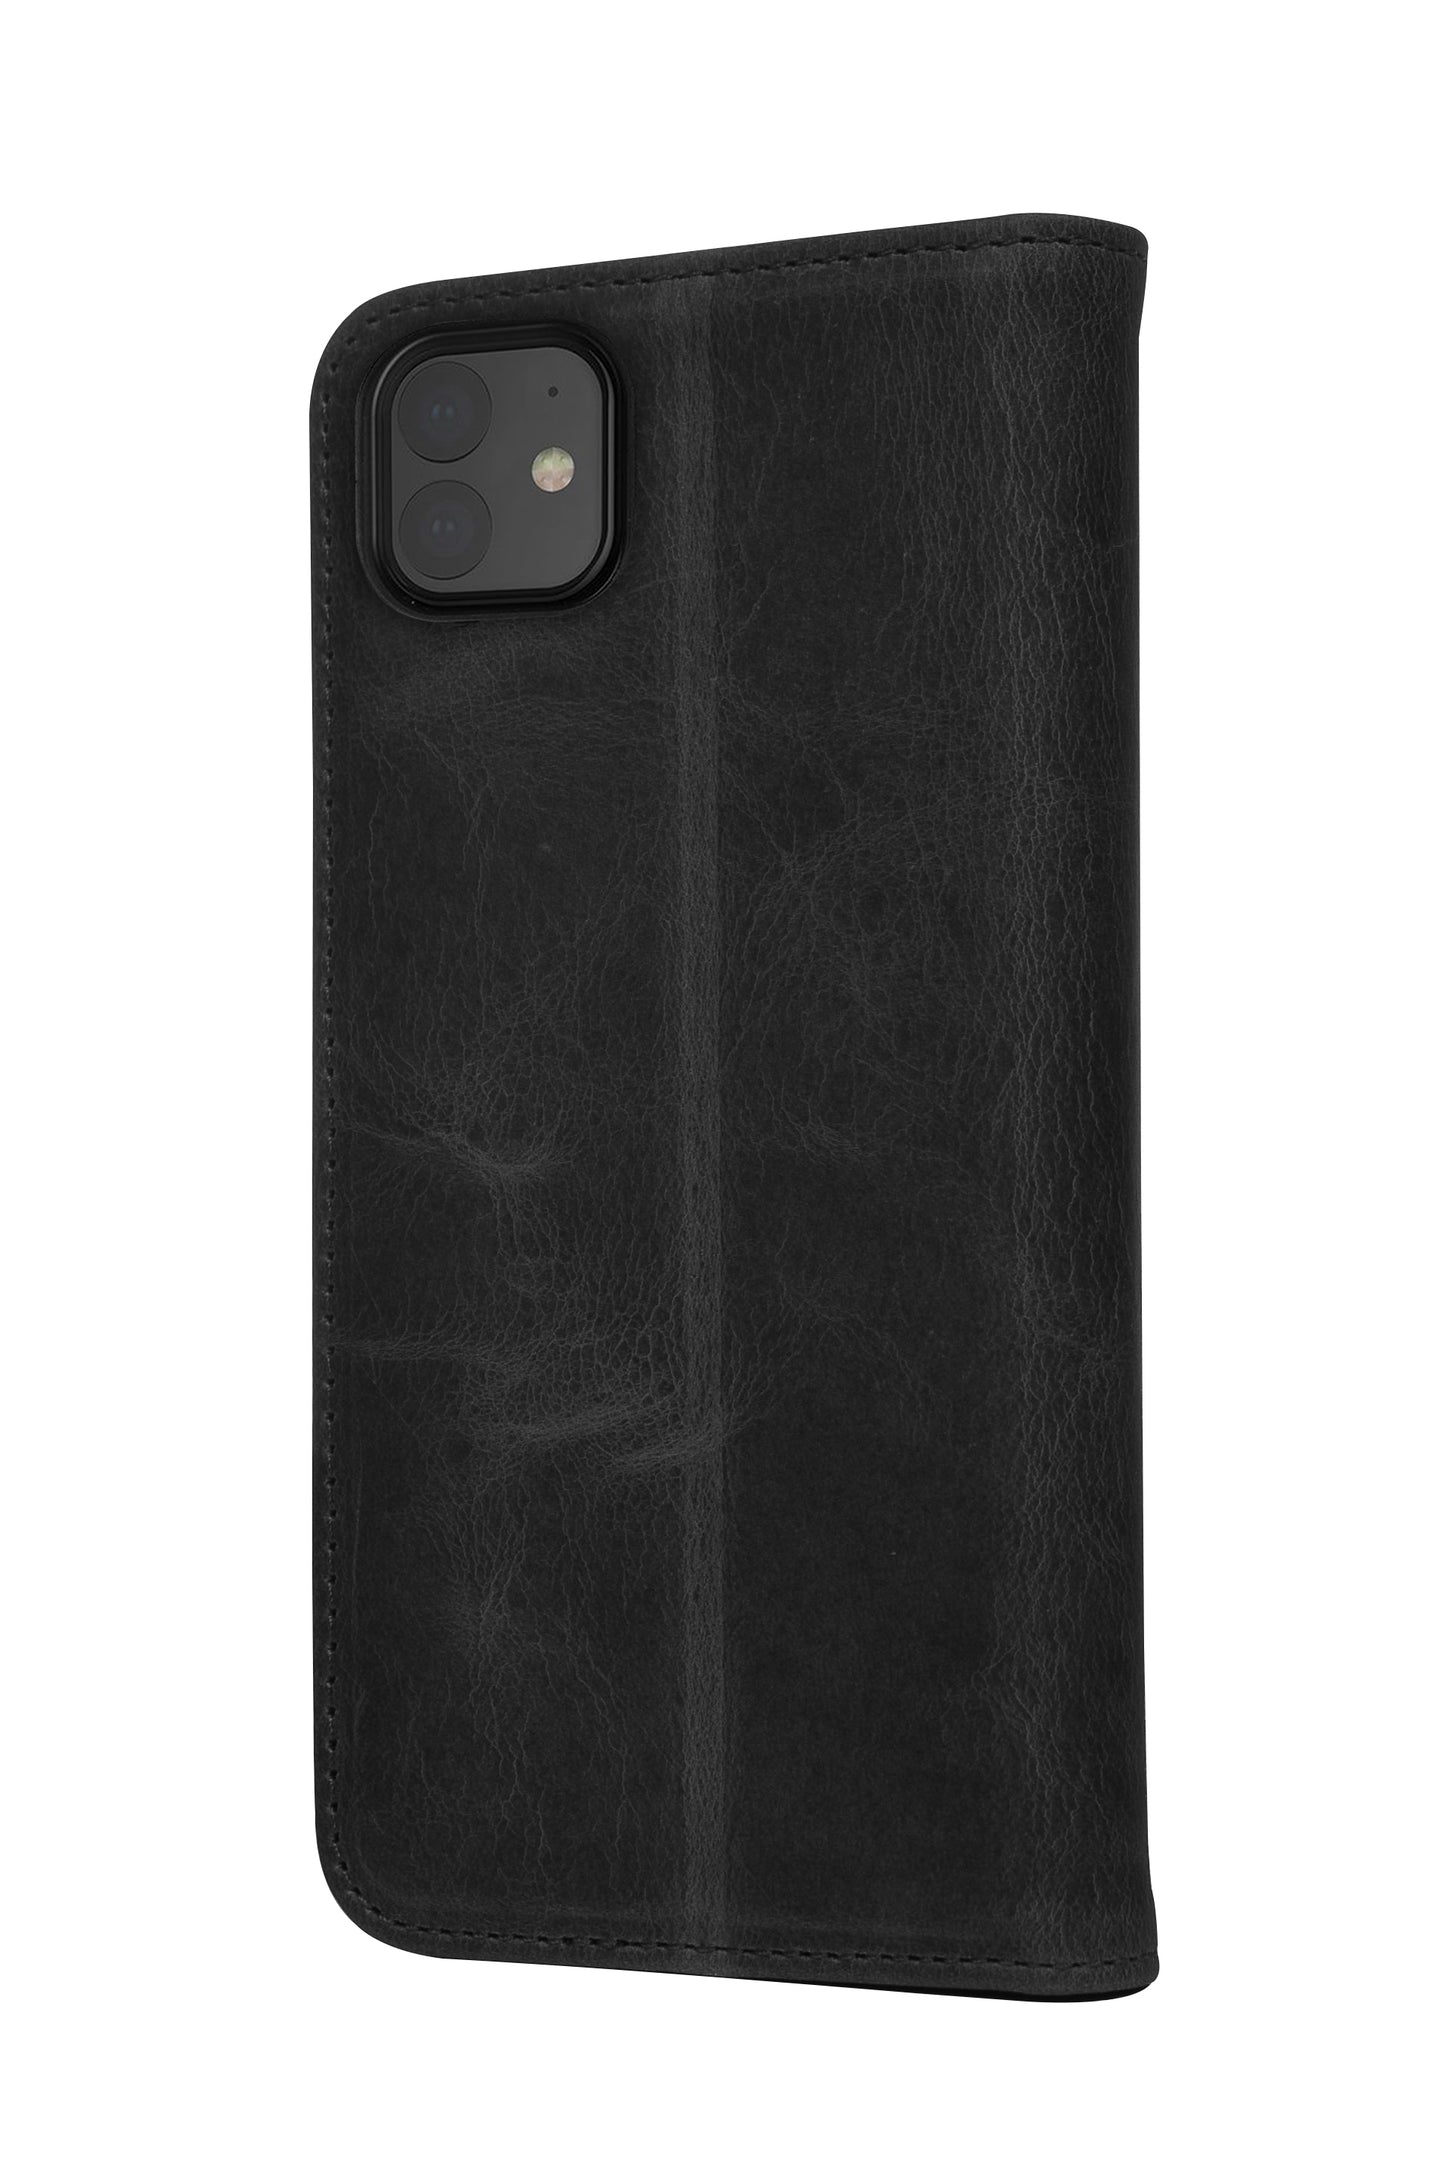 iPhone 12 Mini Leather Case. Premium Slim Genuine Leather Stand Case/Cover/Wallet (Black)